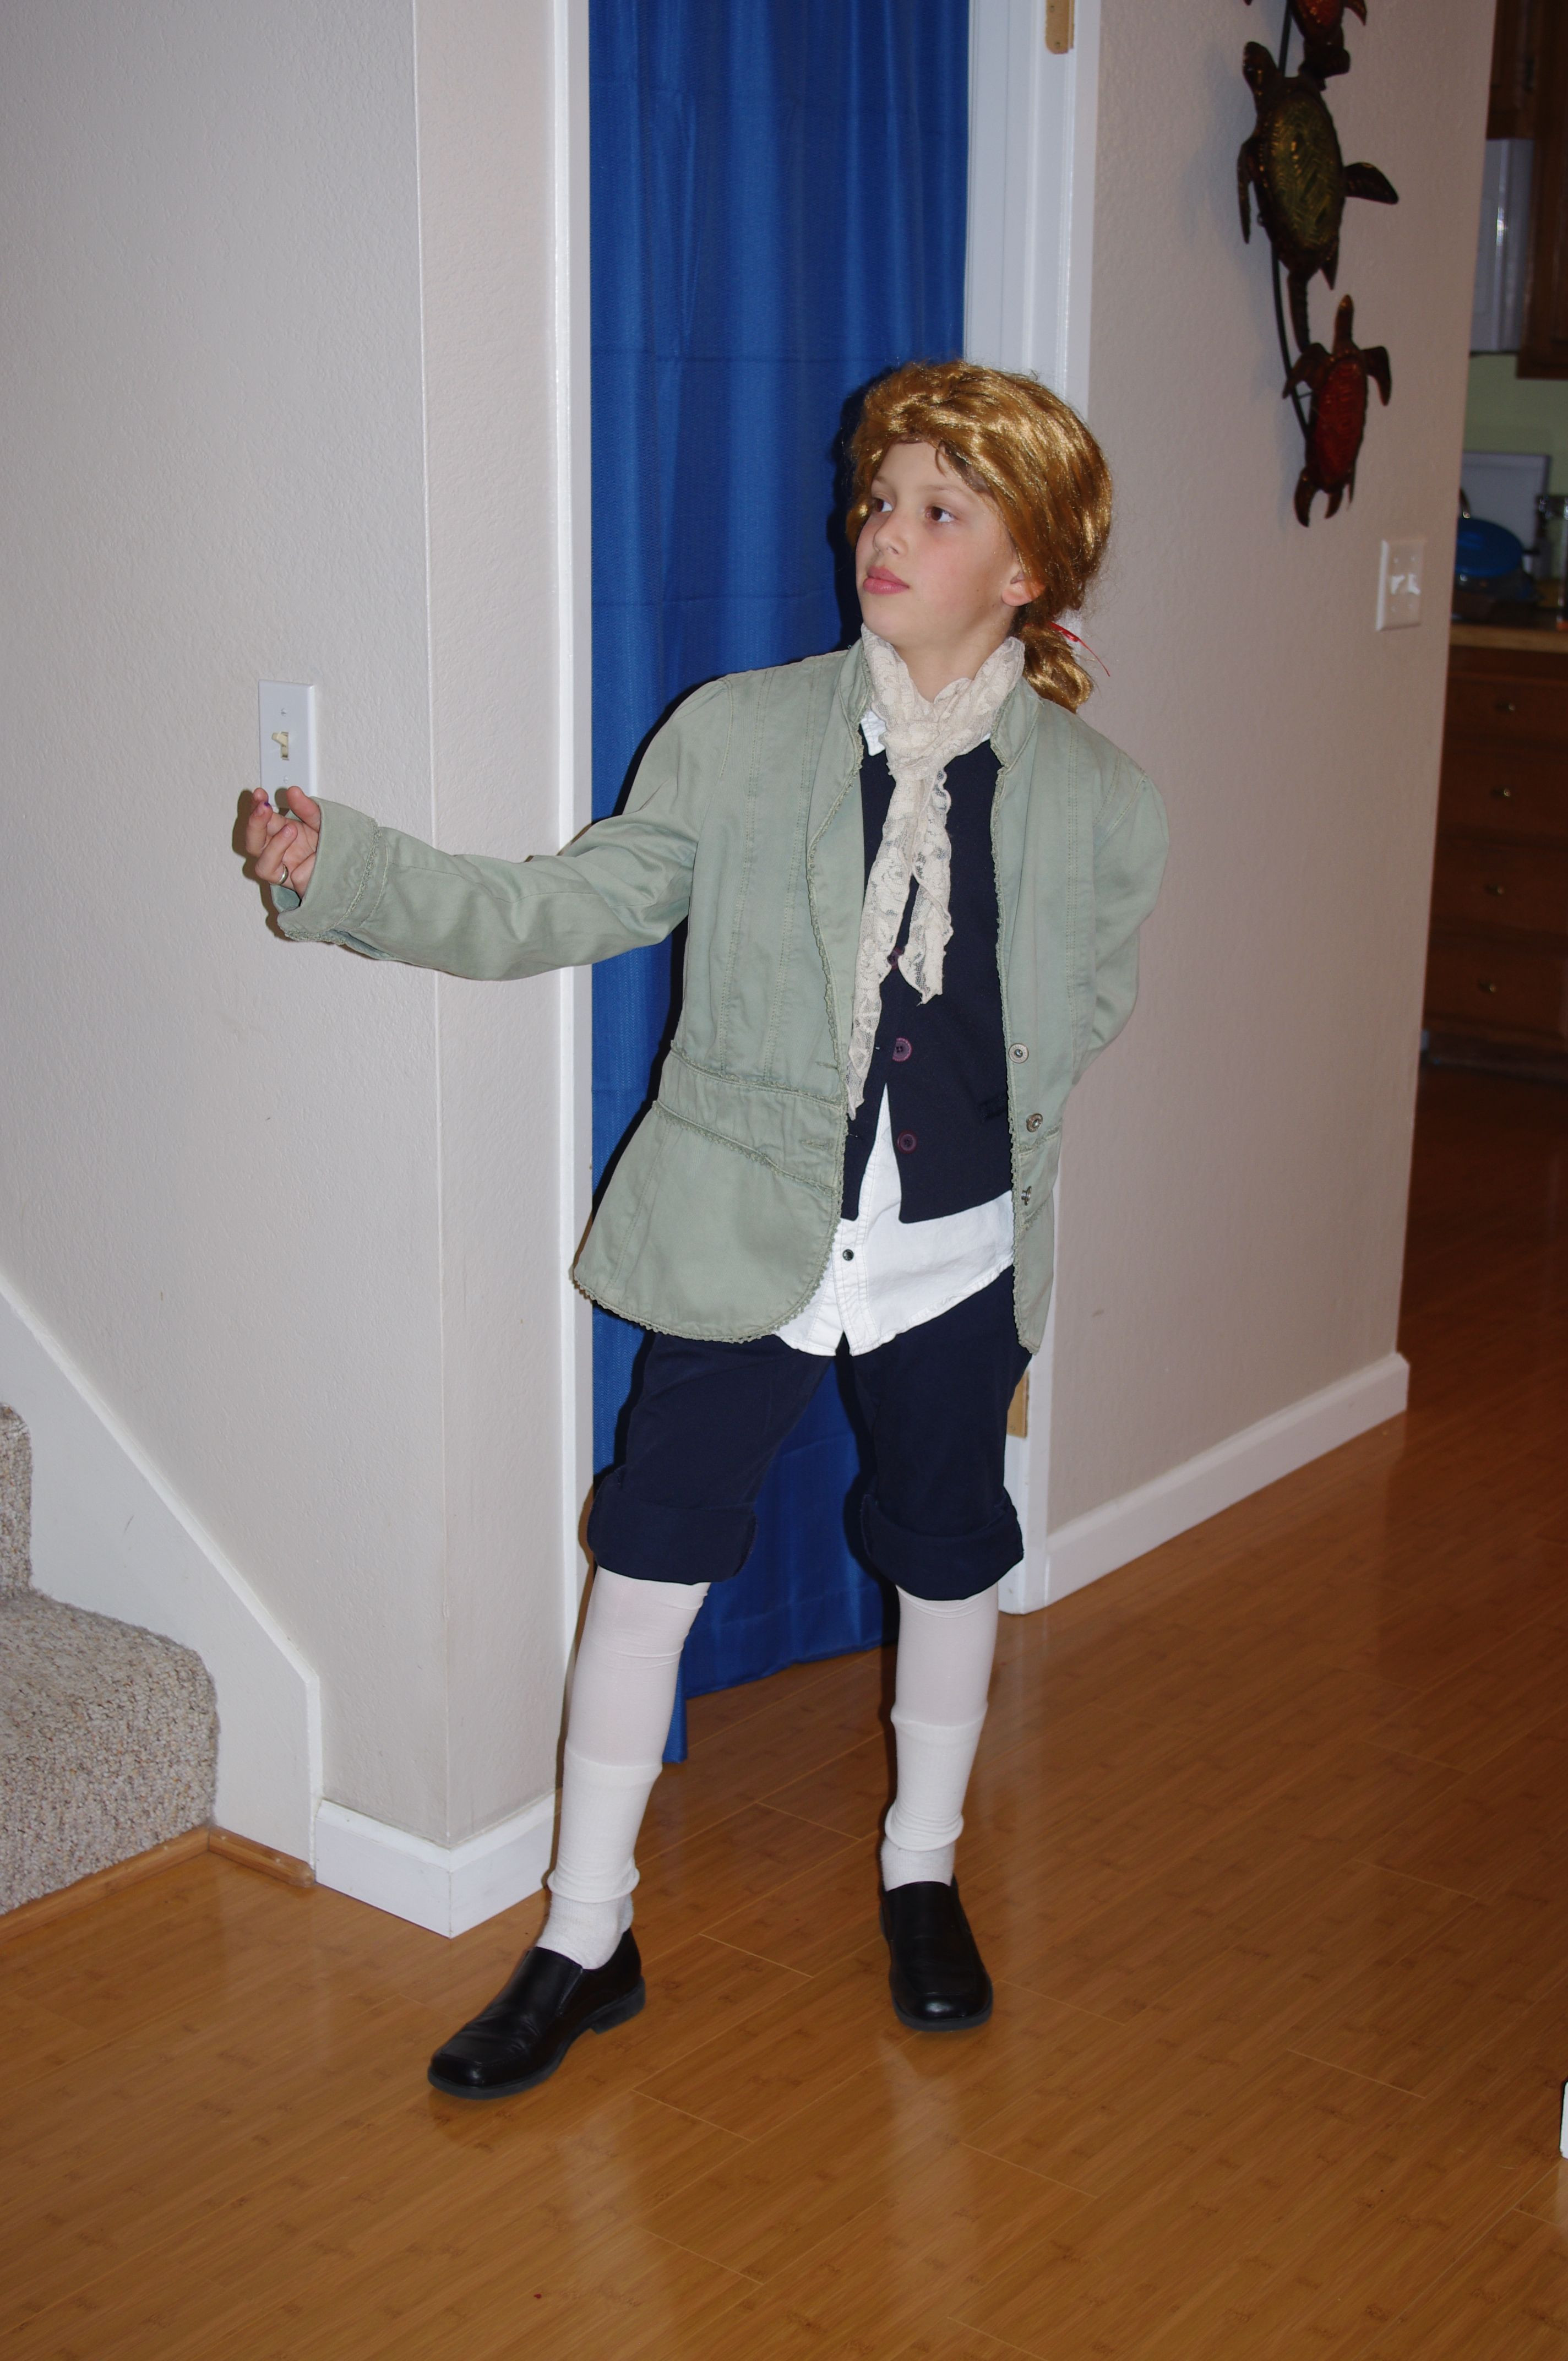 Best ideas about Thomas Jefferson Costume DIY
. Save or Pin Thomas Jefferson costume for "Walk through the Revolution Now.